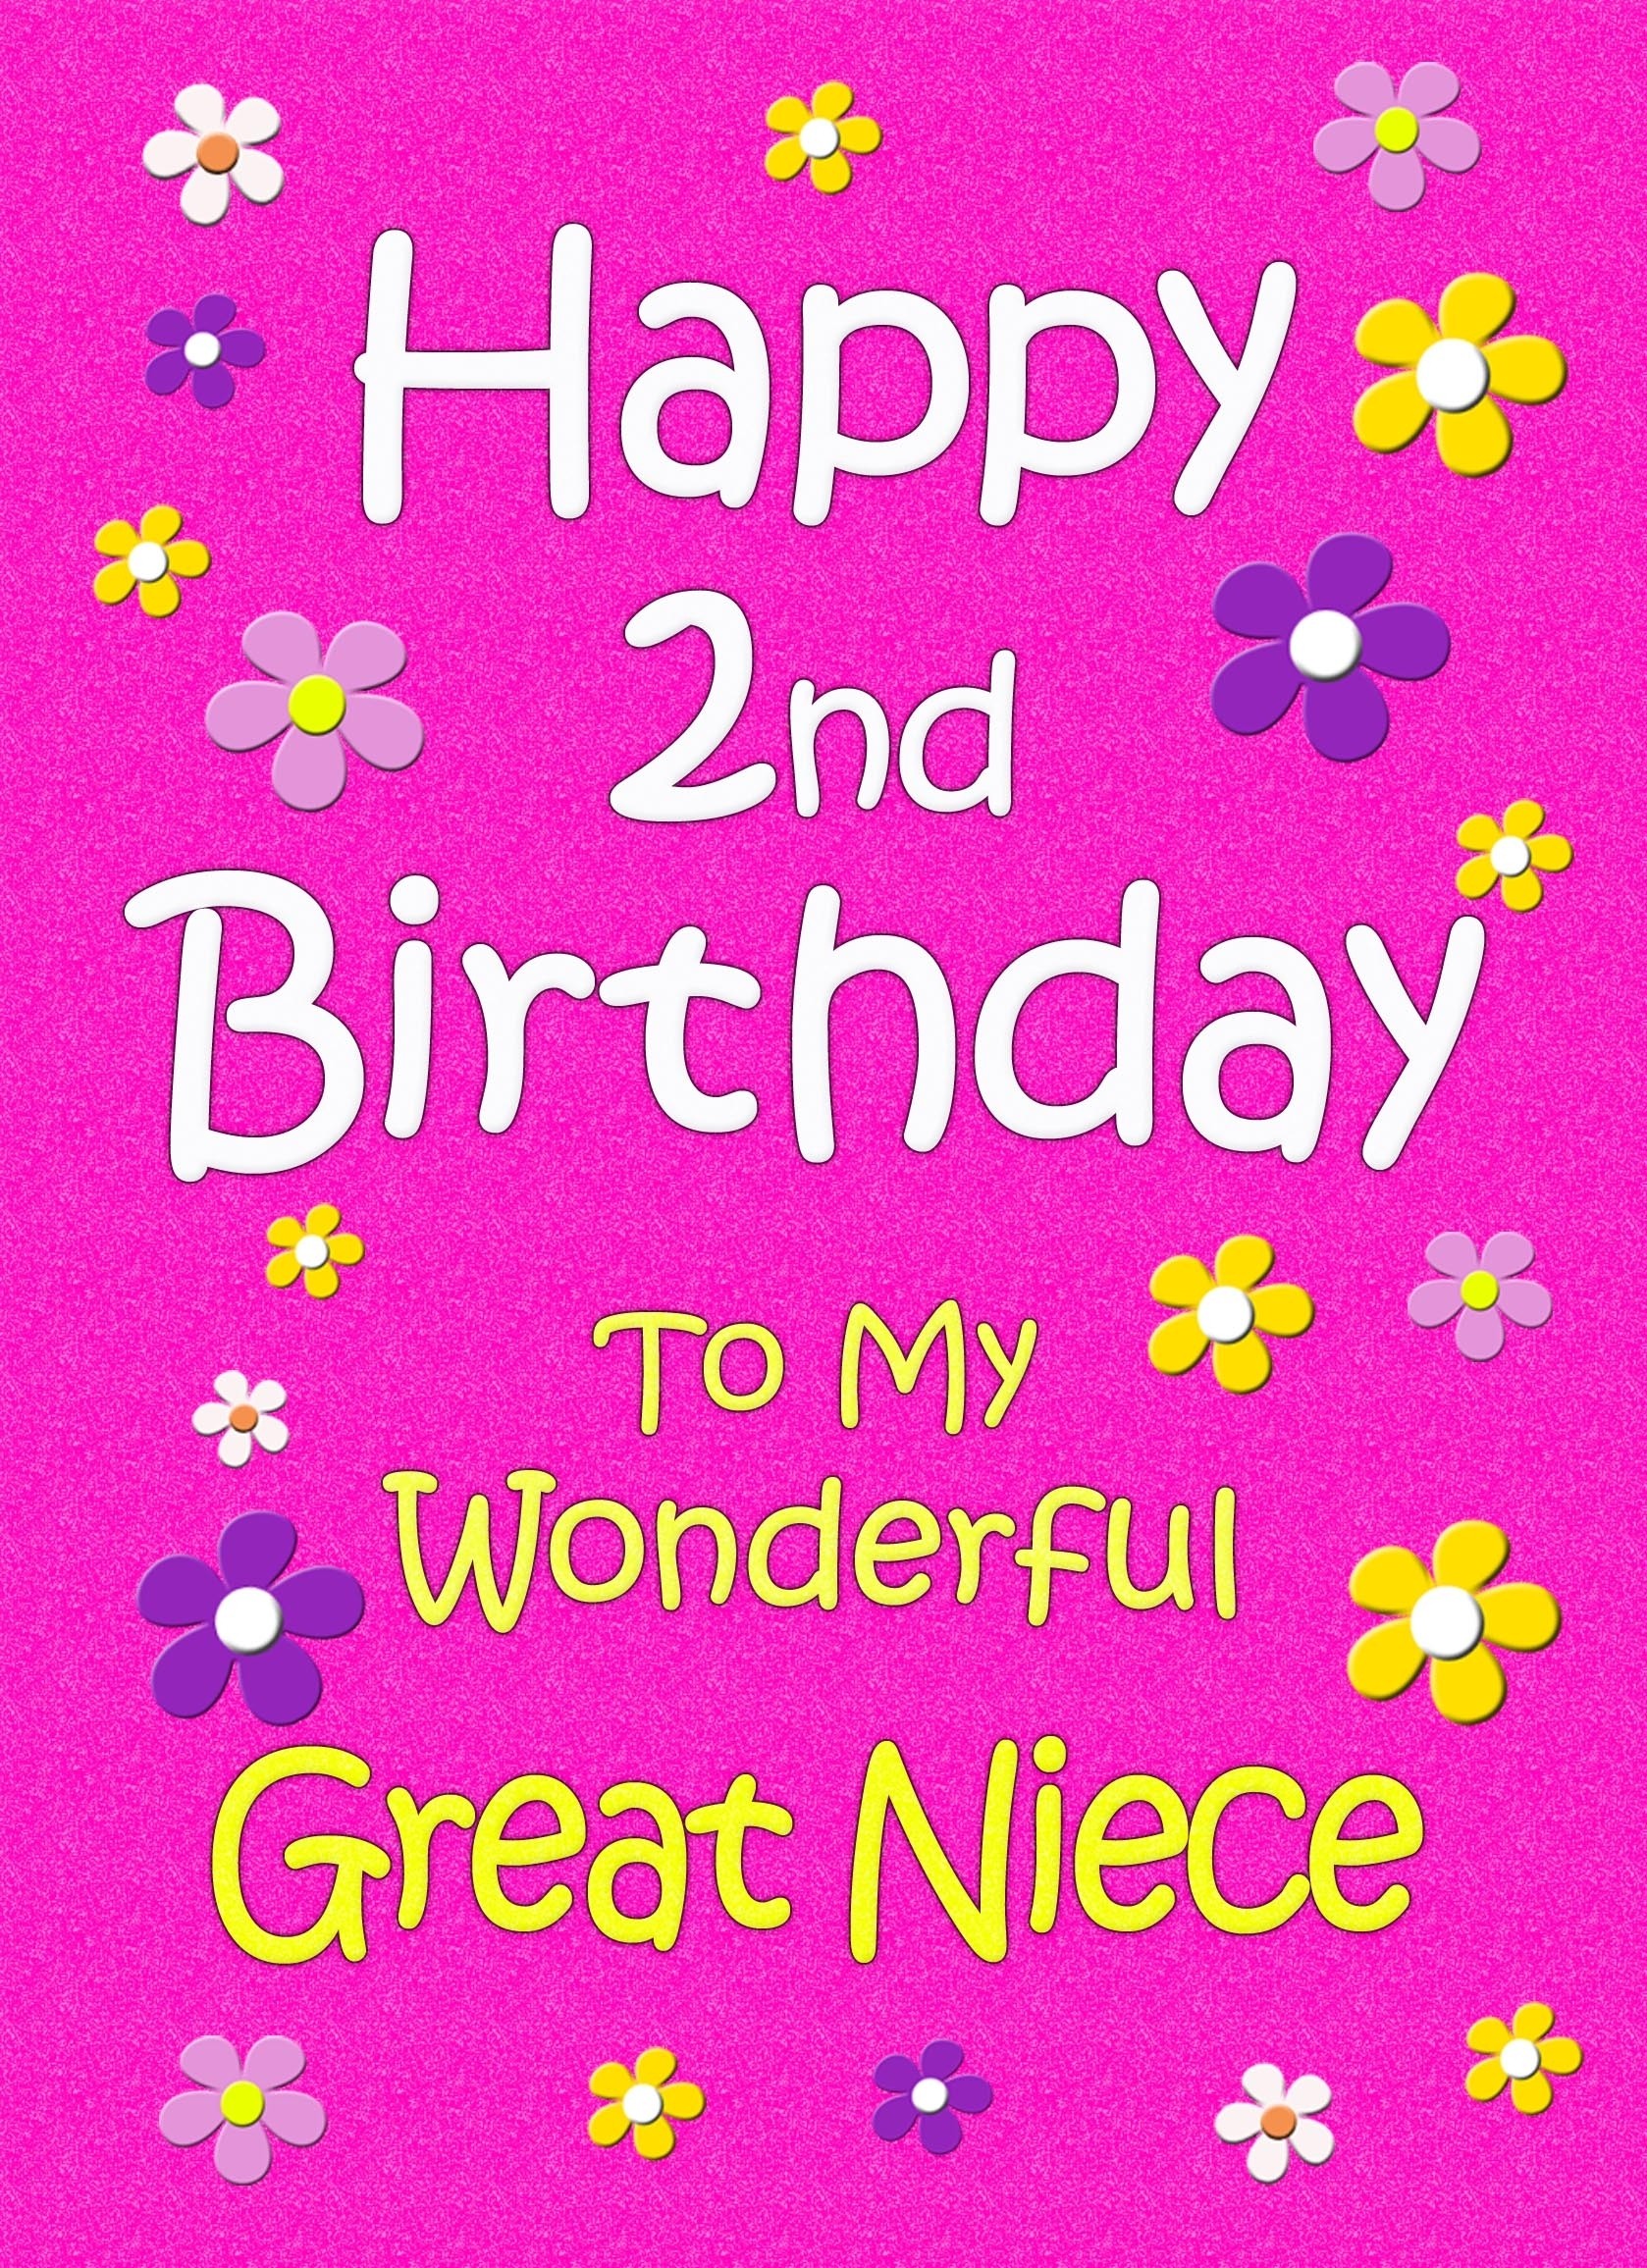 Great Niece 2nd Birthday Card (Pink)